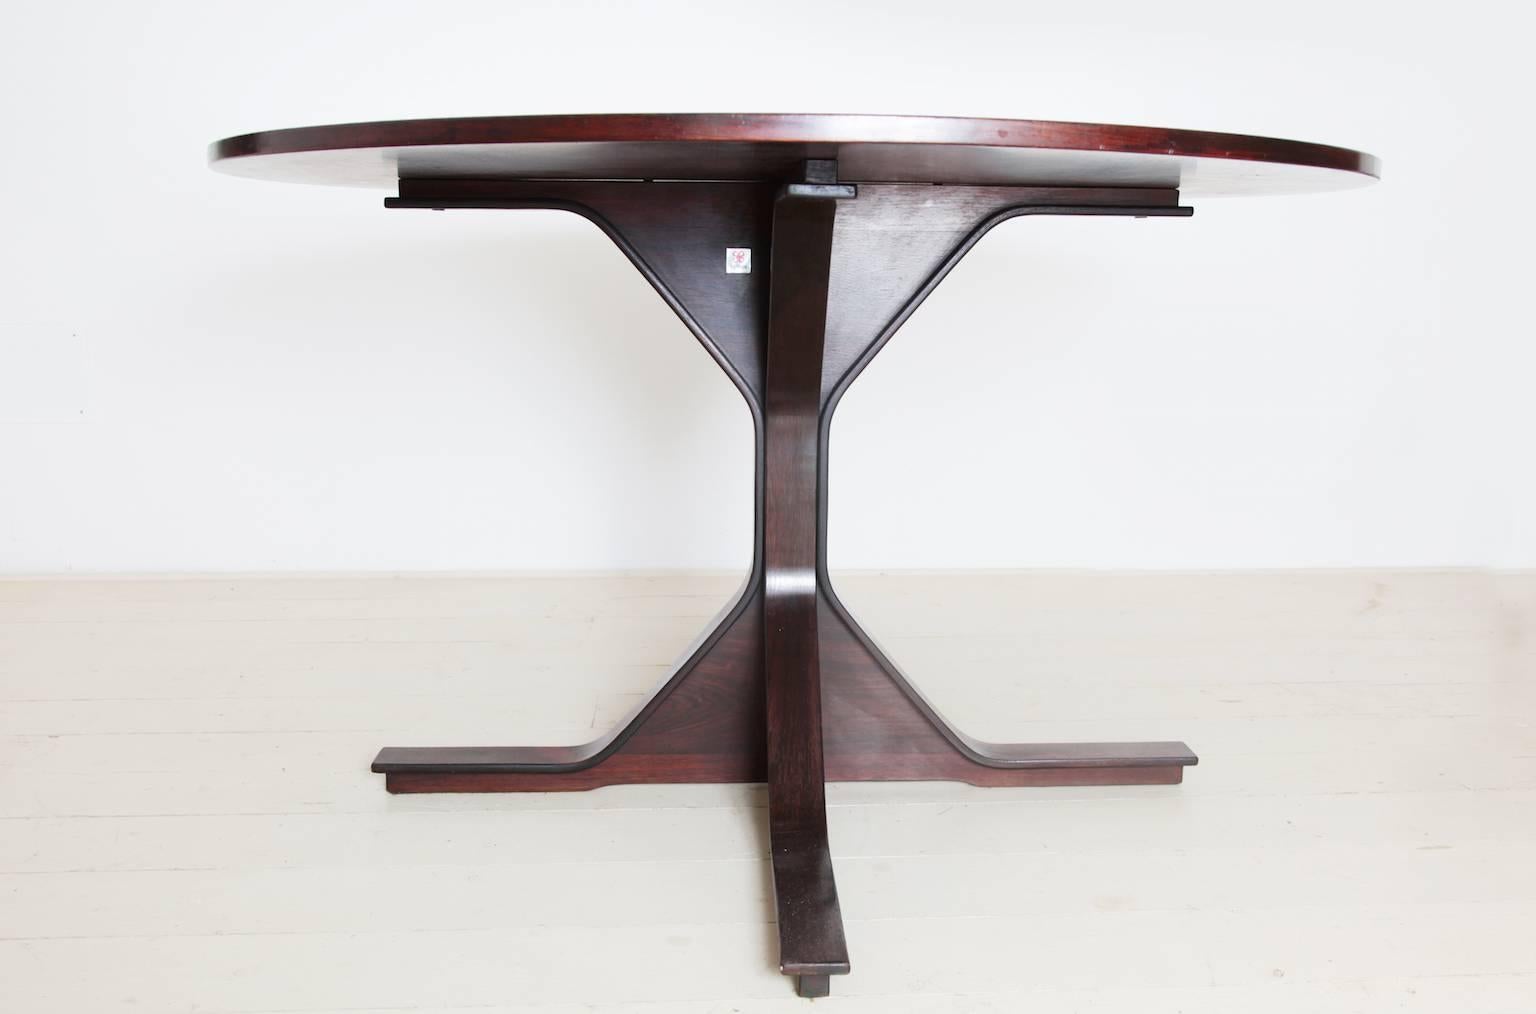 Incredible Gianfranco Frattini dining table 522, manufactured by Bernini, in rosewood Jacaranda.